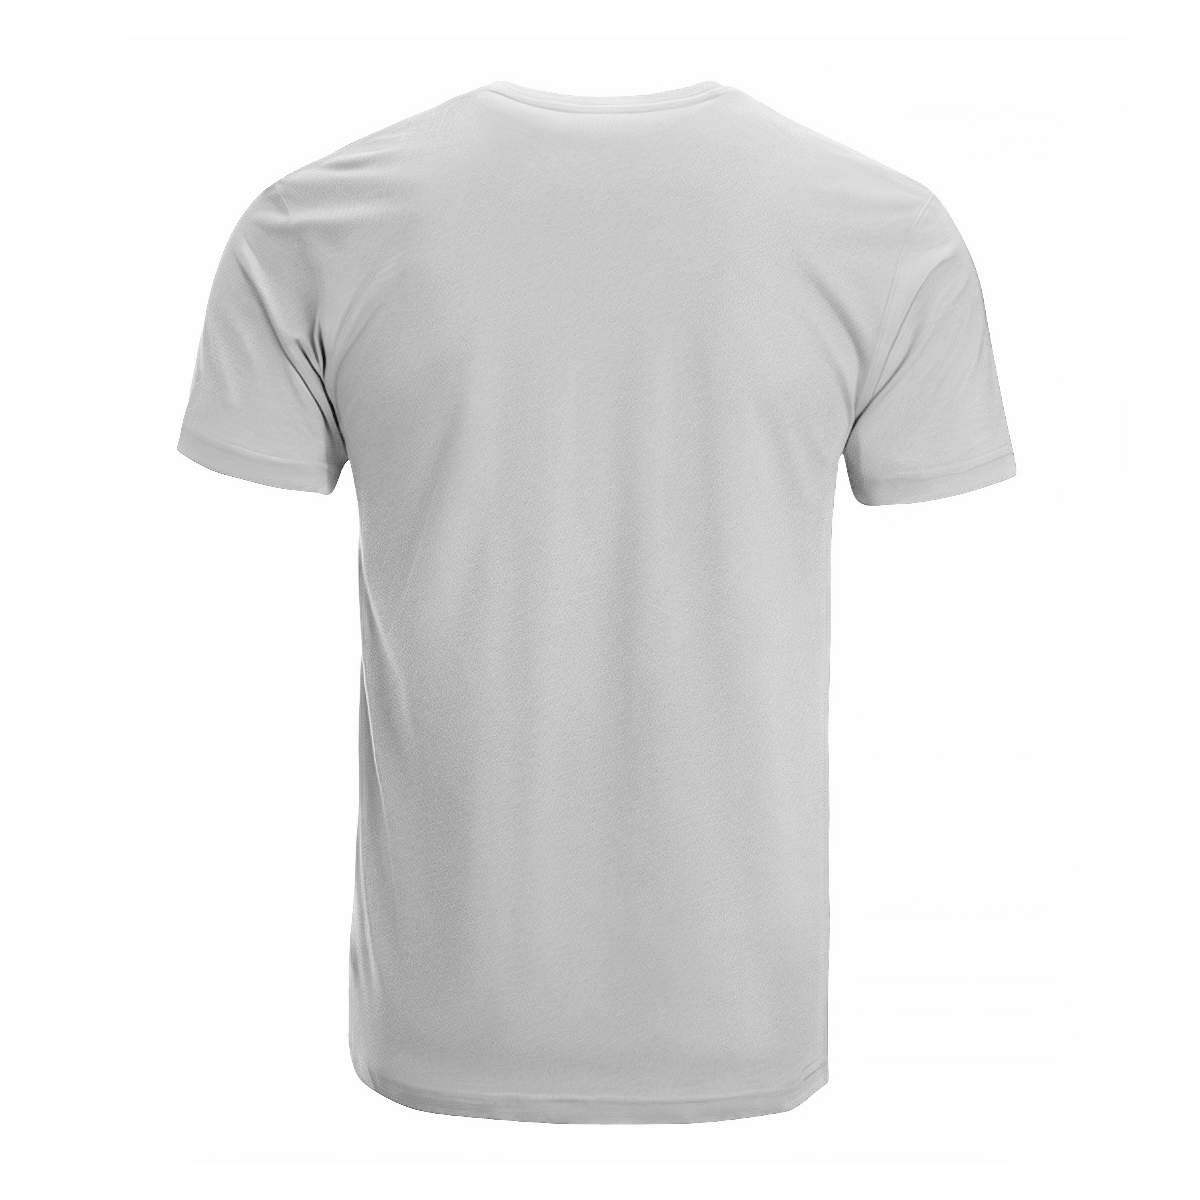 MacBean Tartan Crest T-shirt - I'm not yelling style